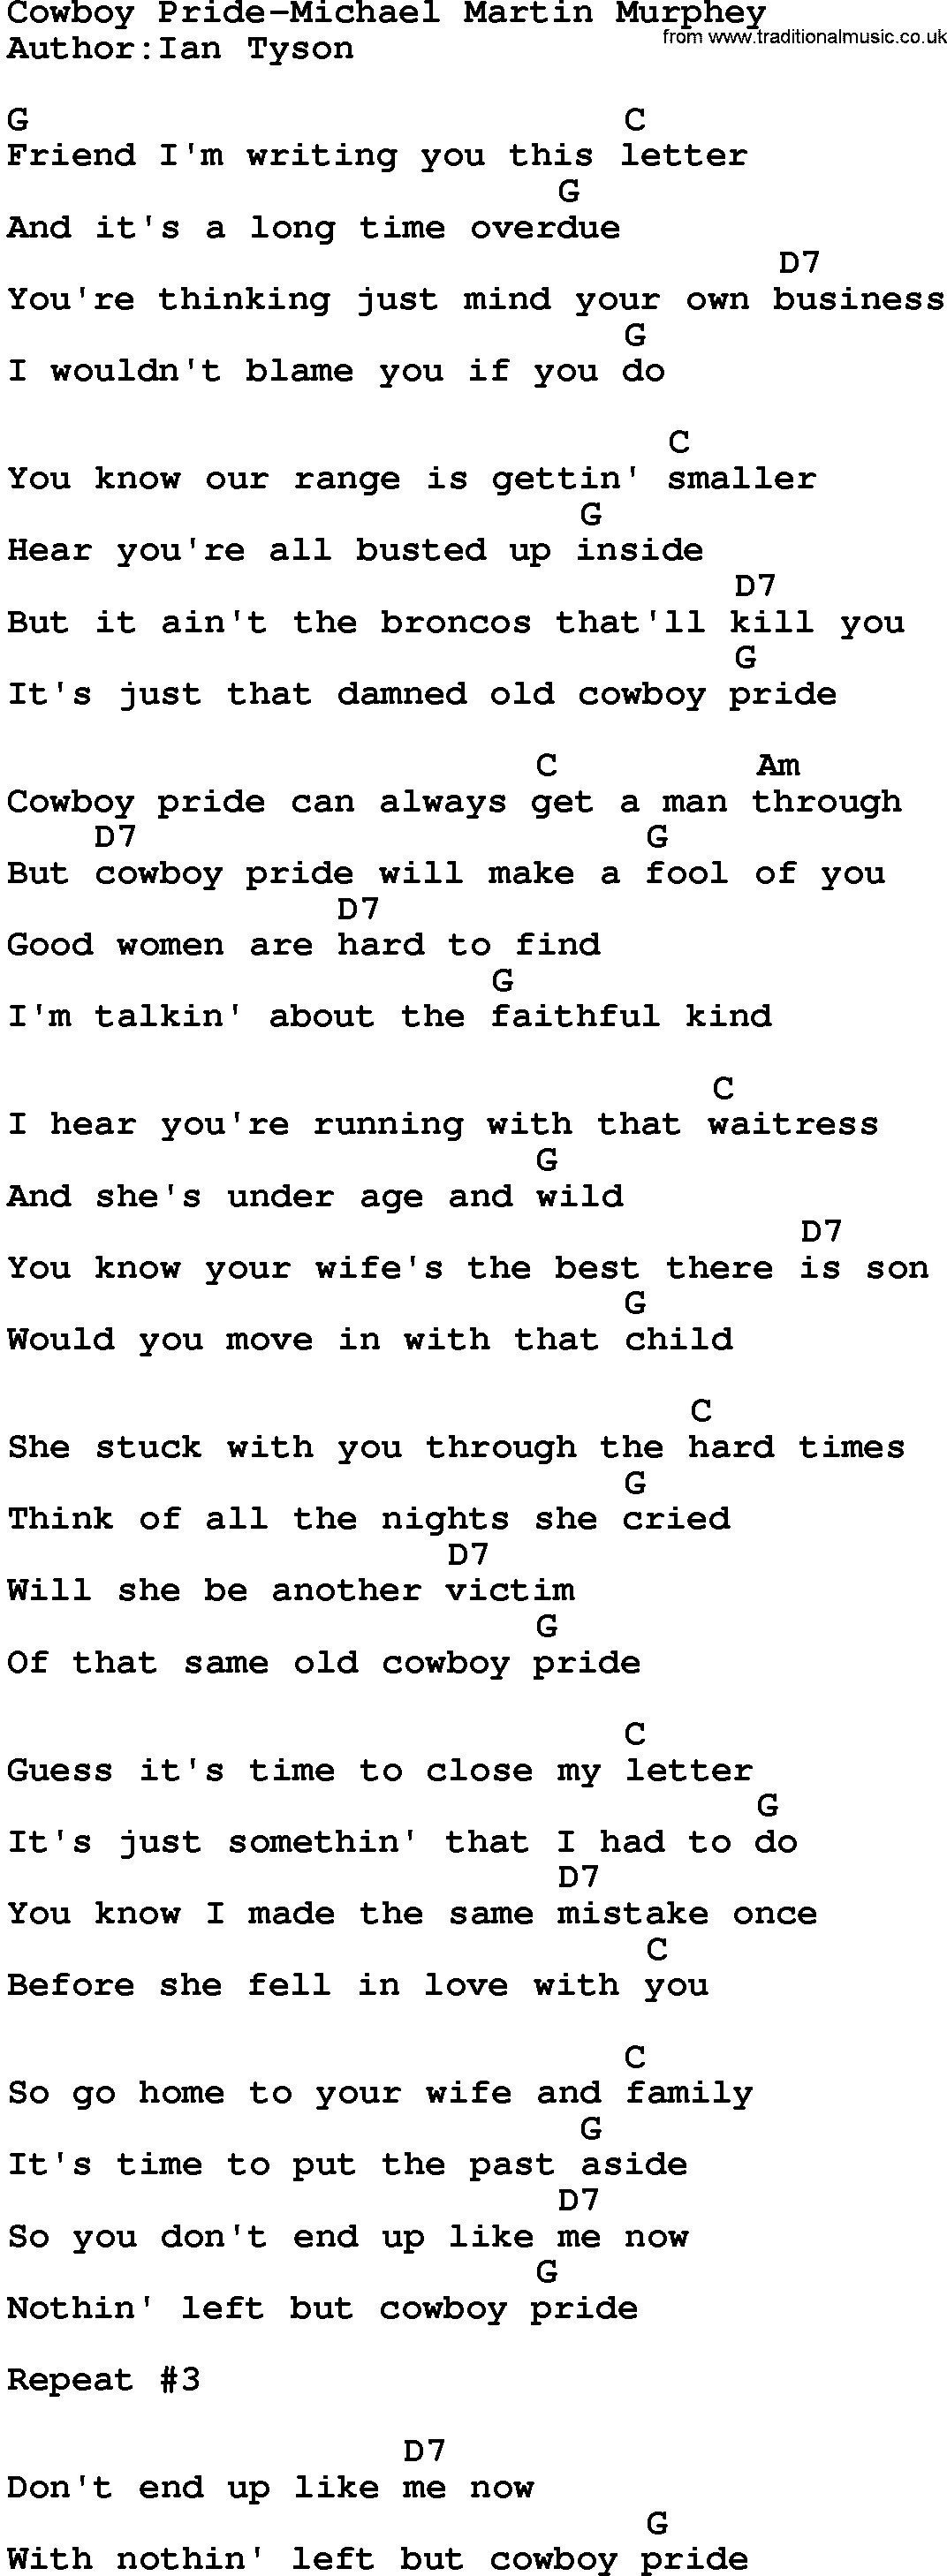 Country music song: Cowboy Pride-Michael Martin Murphey lyrics and chords